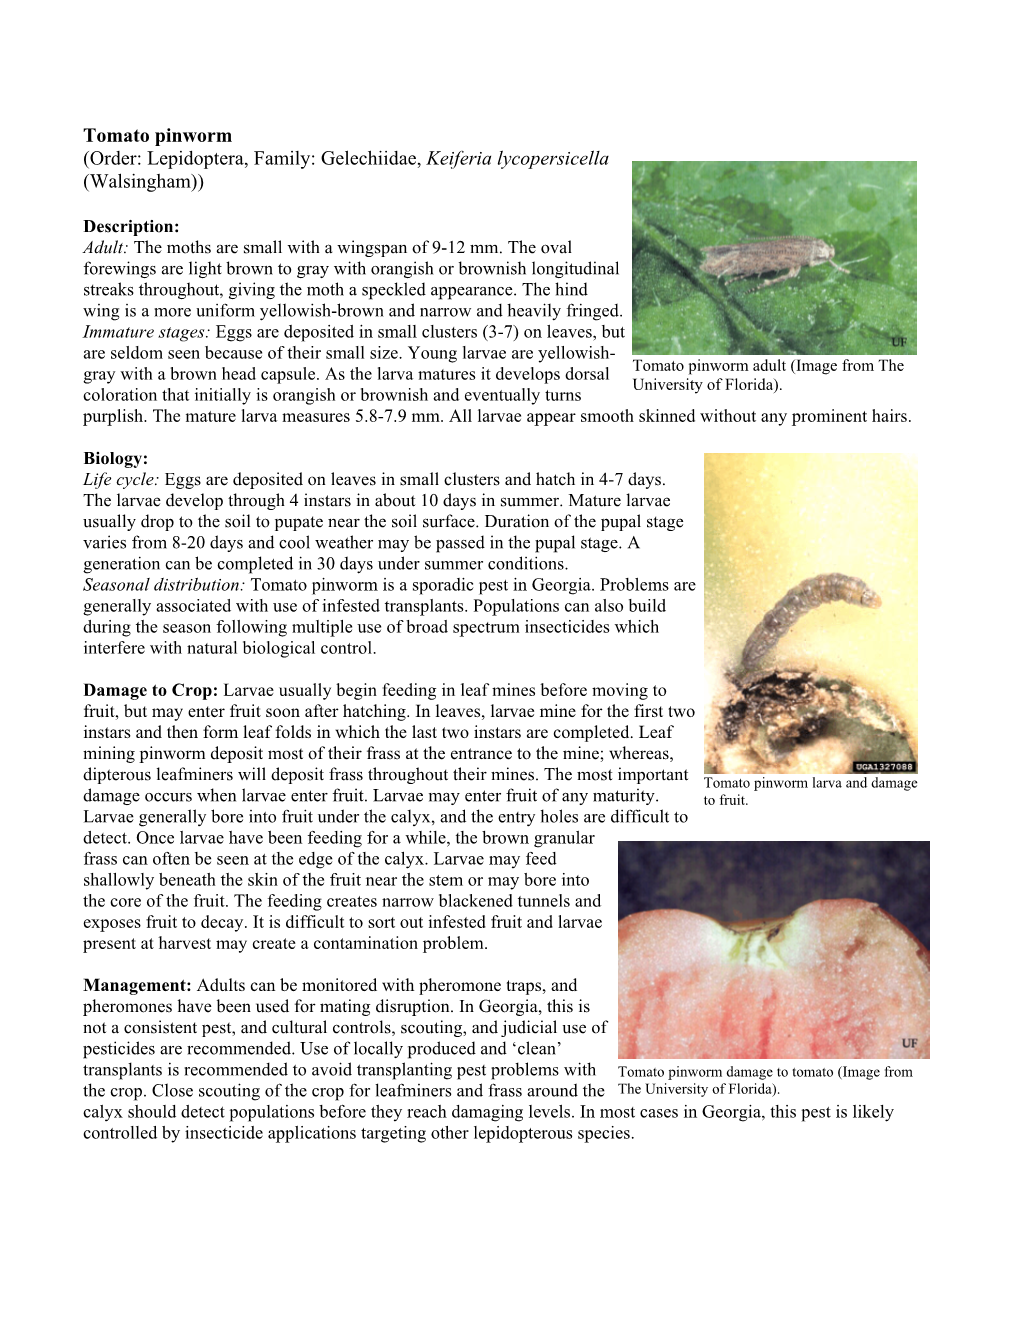 Tomato Pinworm (Order: Lepidoptera, Family: Gelechiidae, Keiferia Lycopersicella (Walsingham))